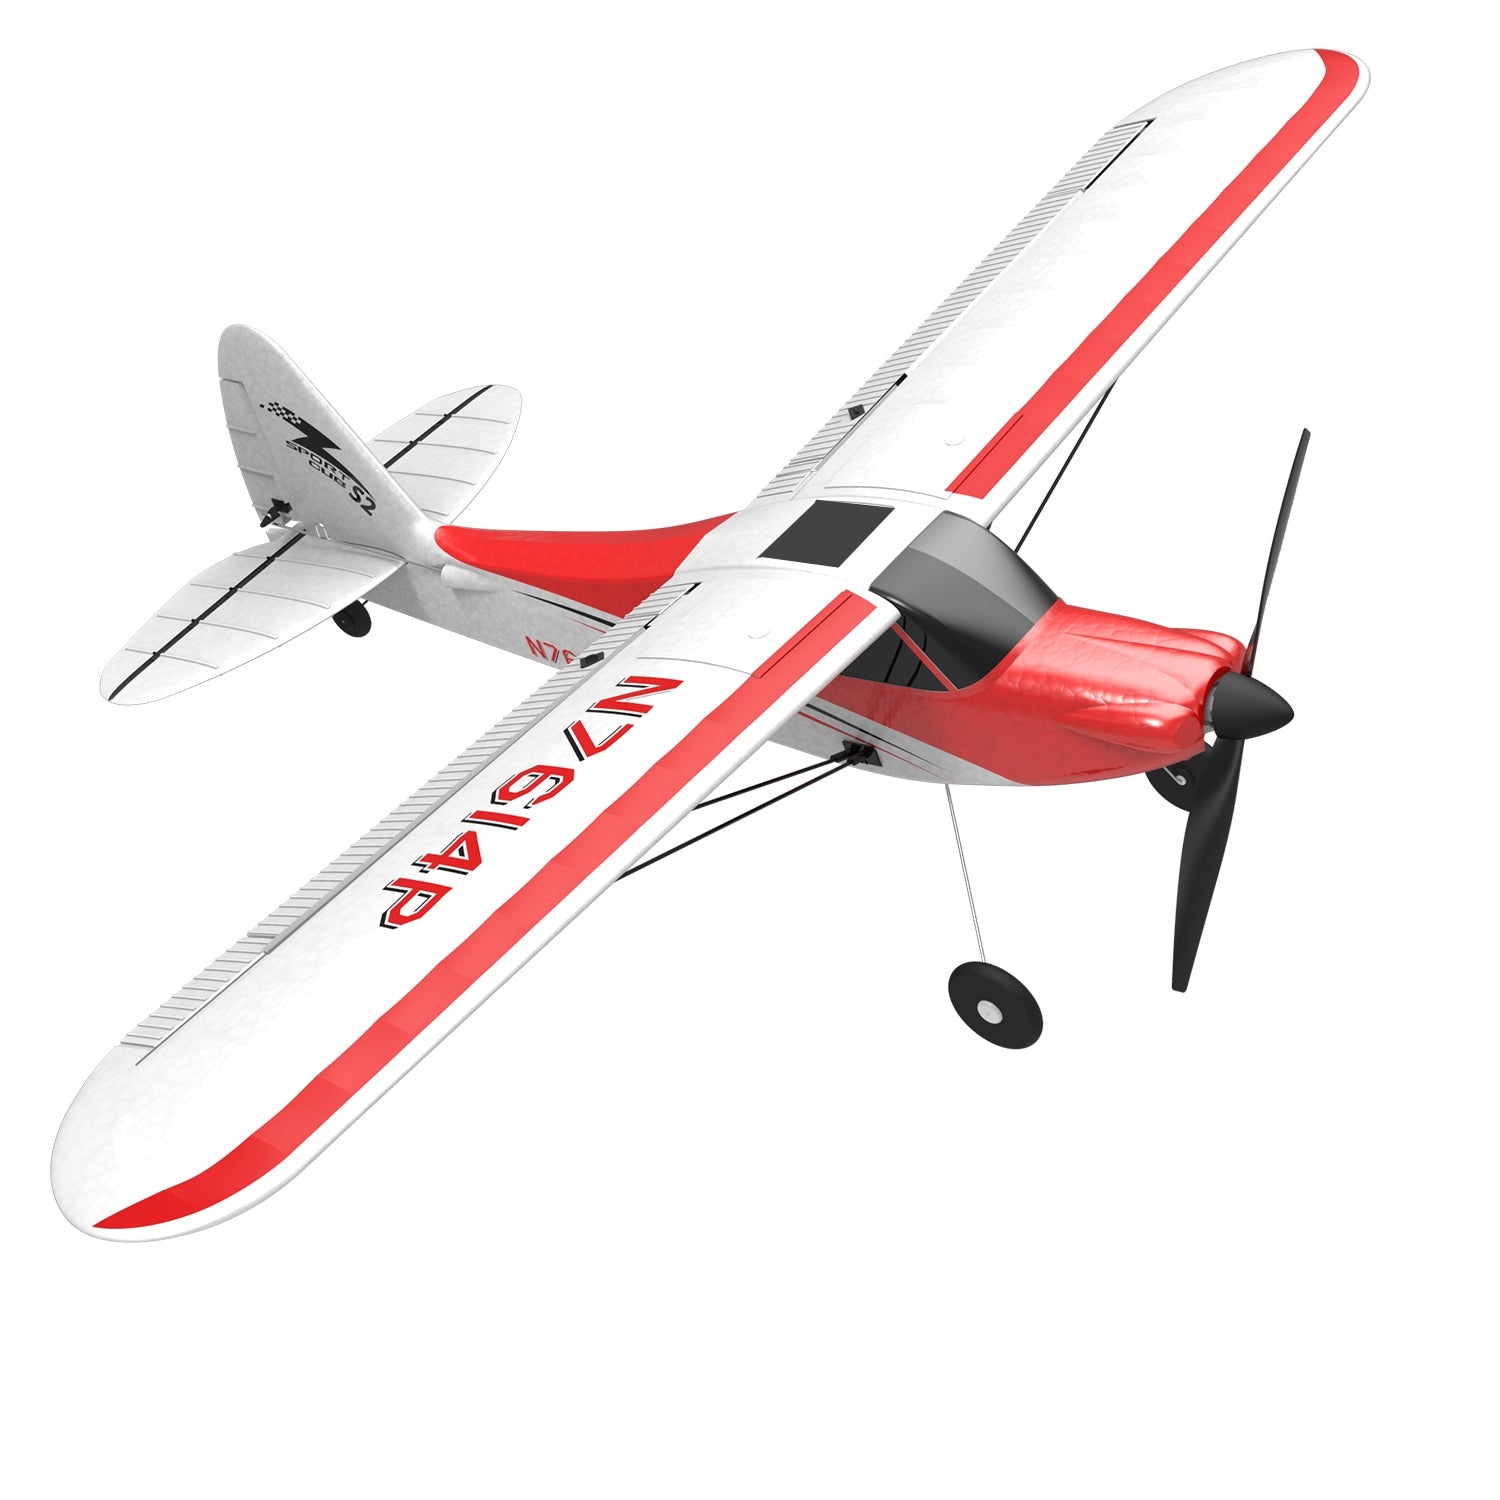 VOLANTEXRC Sport Cub 500 4Ch RC Trainer Airplane w- 6-Axis Gyro One-key Aerobatic Park flyer (761-4) RTF Red